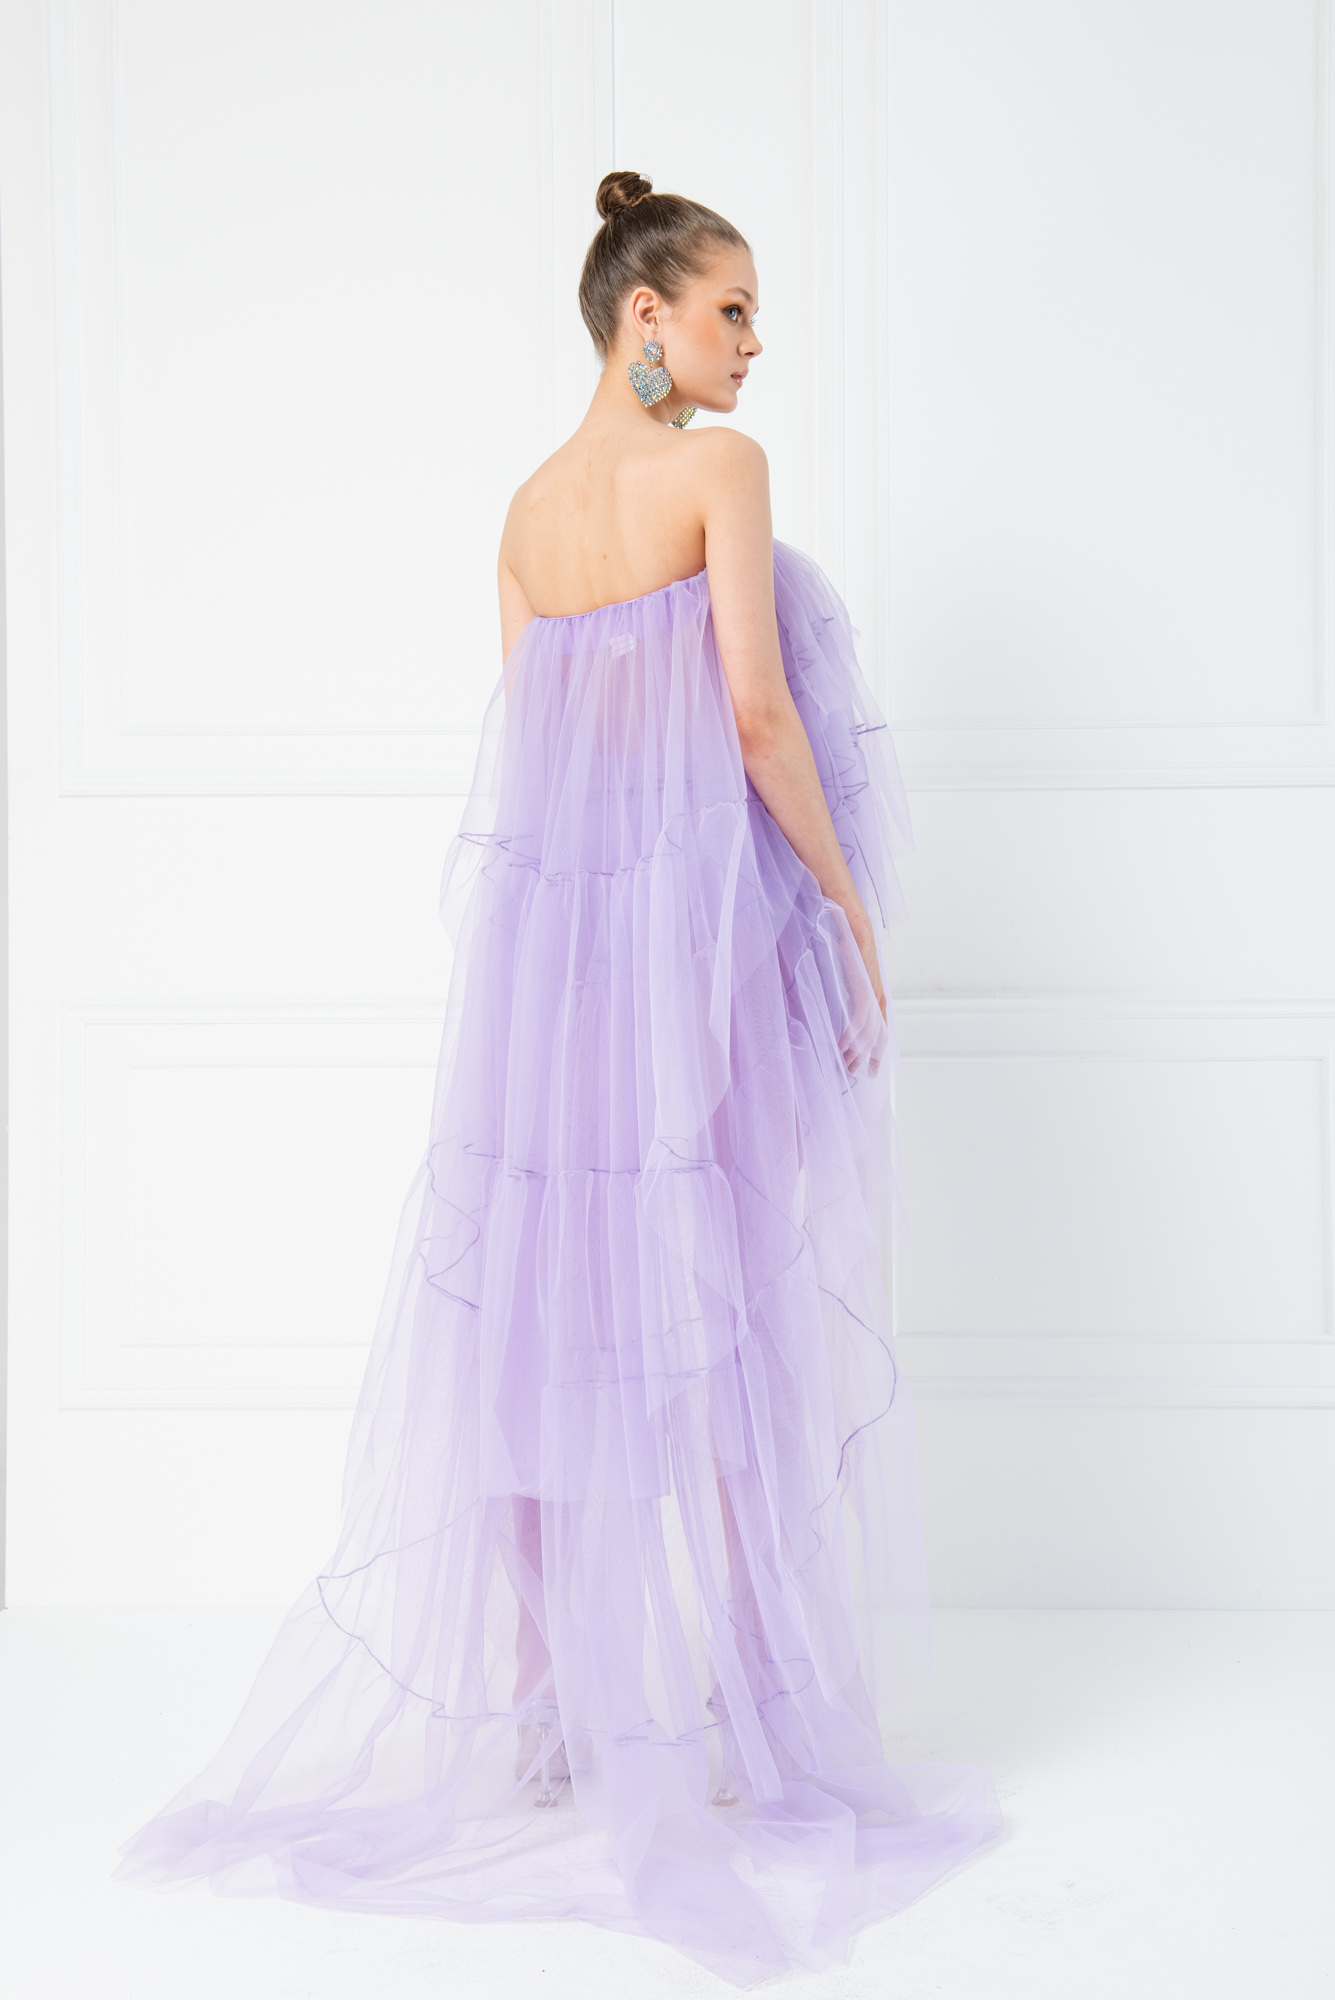 Tulle Detail Strapless Lilac Sheer Mini Dress